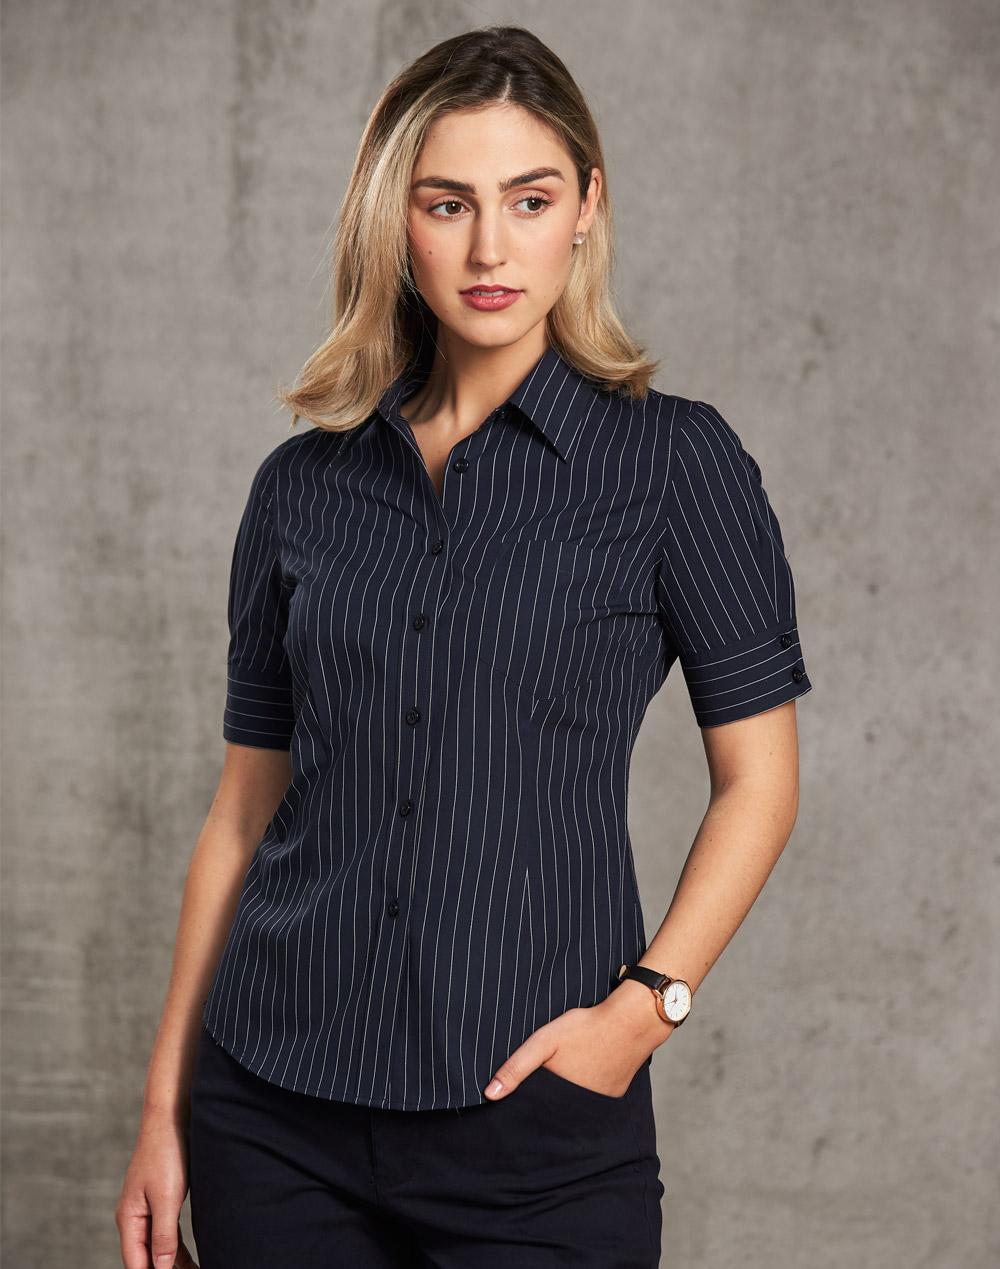 Benchmark M8224 Women's Pin Stripe Short Sleeve Shirt